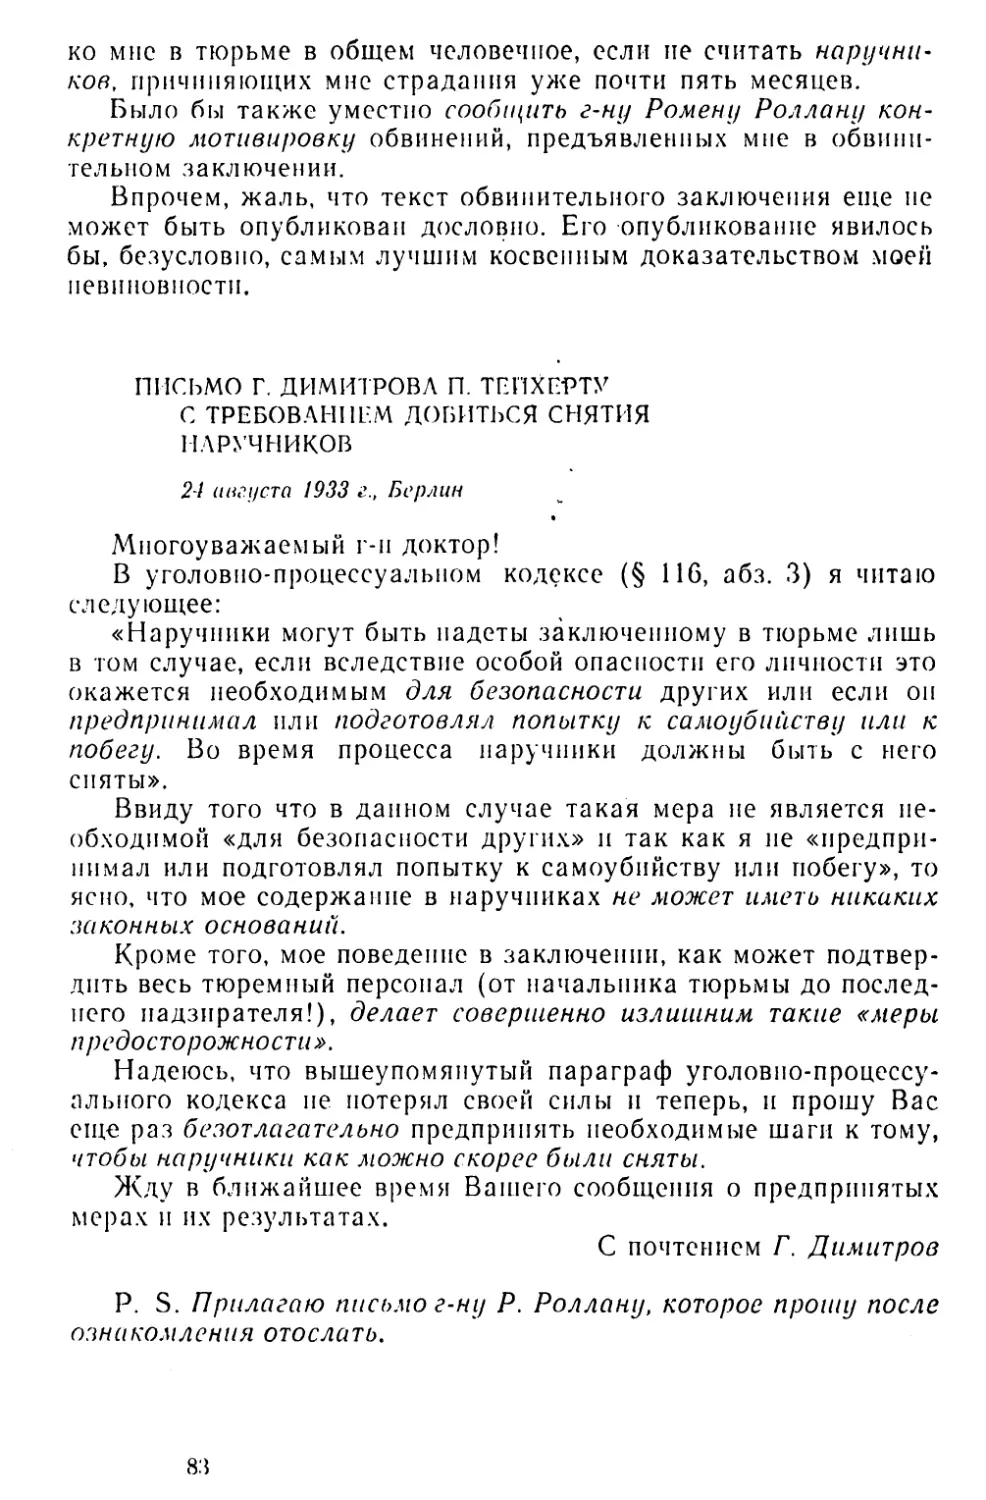 Письмо Г. Димитрова П. Тейхерту с требованием добиться снятия наручников. 24 августа 1933 г